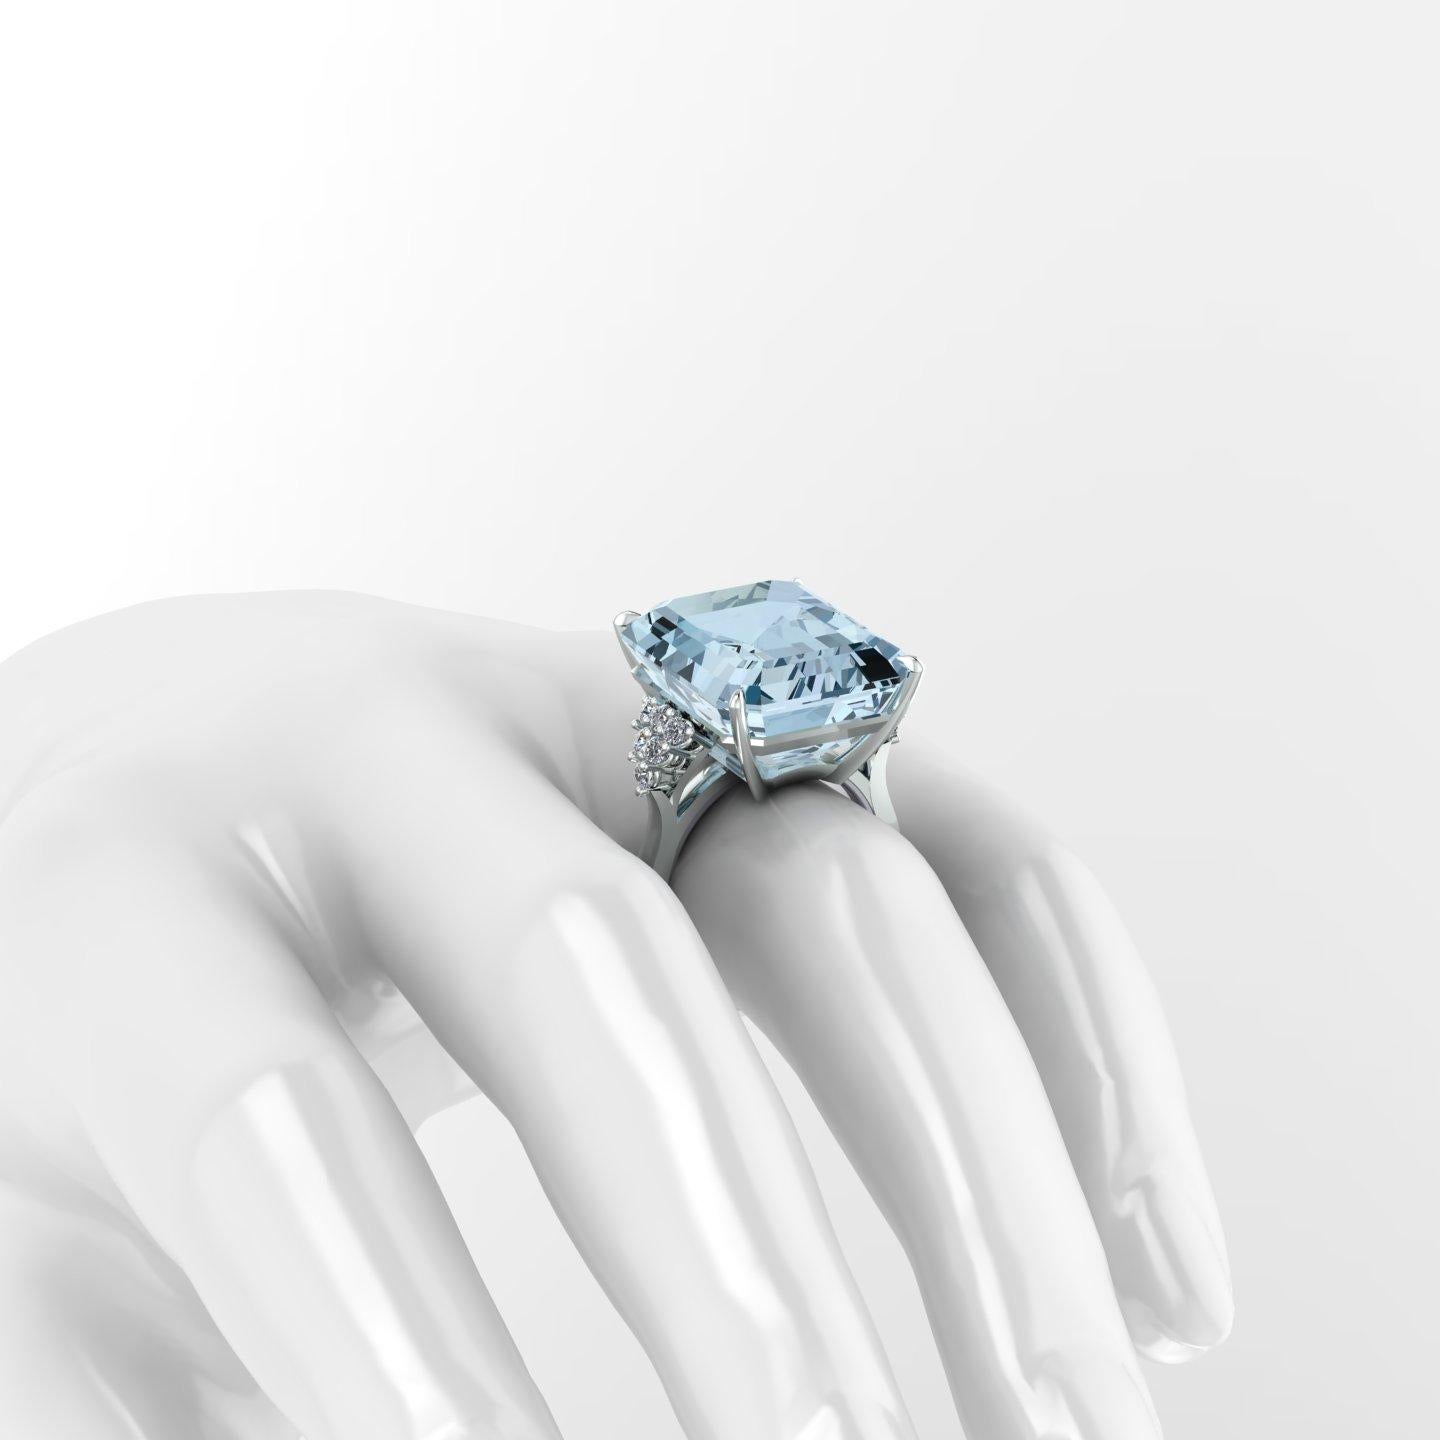 24.02 carats Aquamarine Setting in Platinum 950, side diamonds 0.36 carats 2